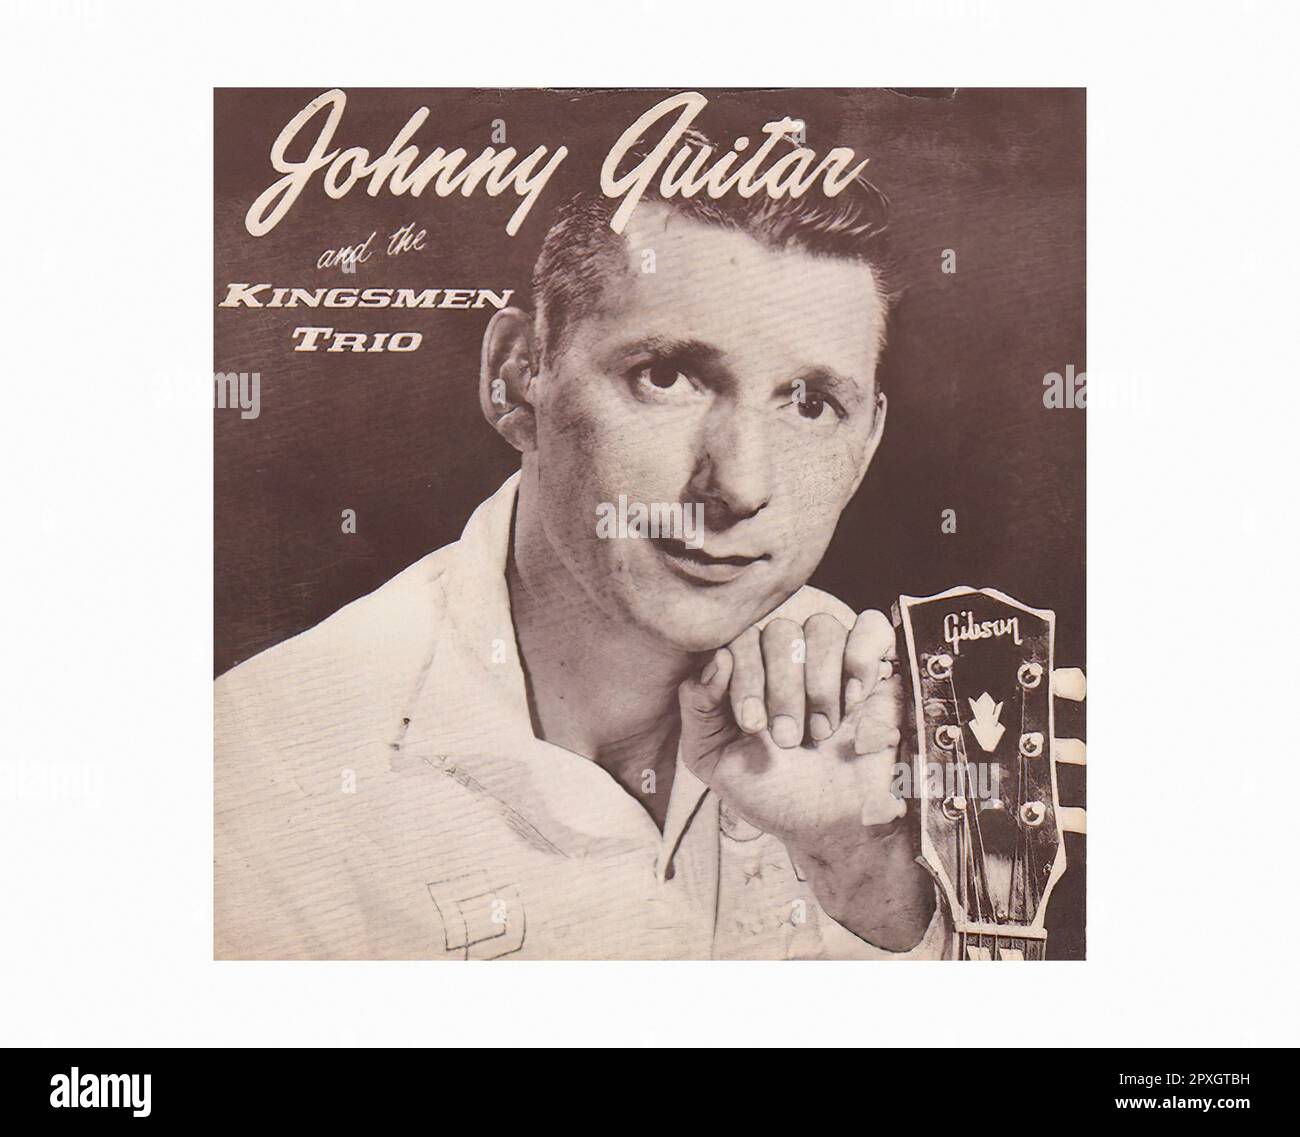 Johnny Guitar - 1964 01 A - Vintage 45 R.P.M Music Vinyl Record Photo Stock  - Alamy